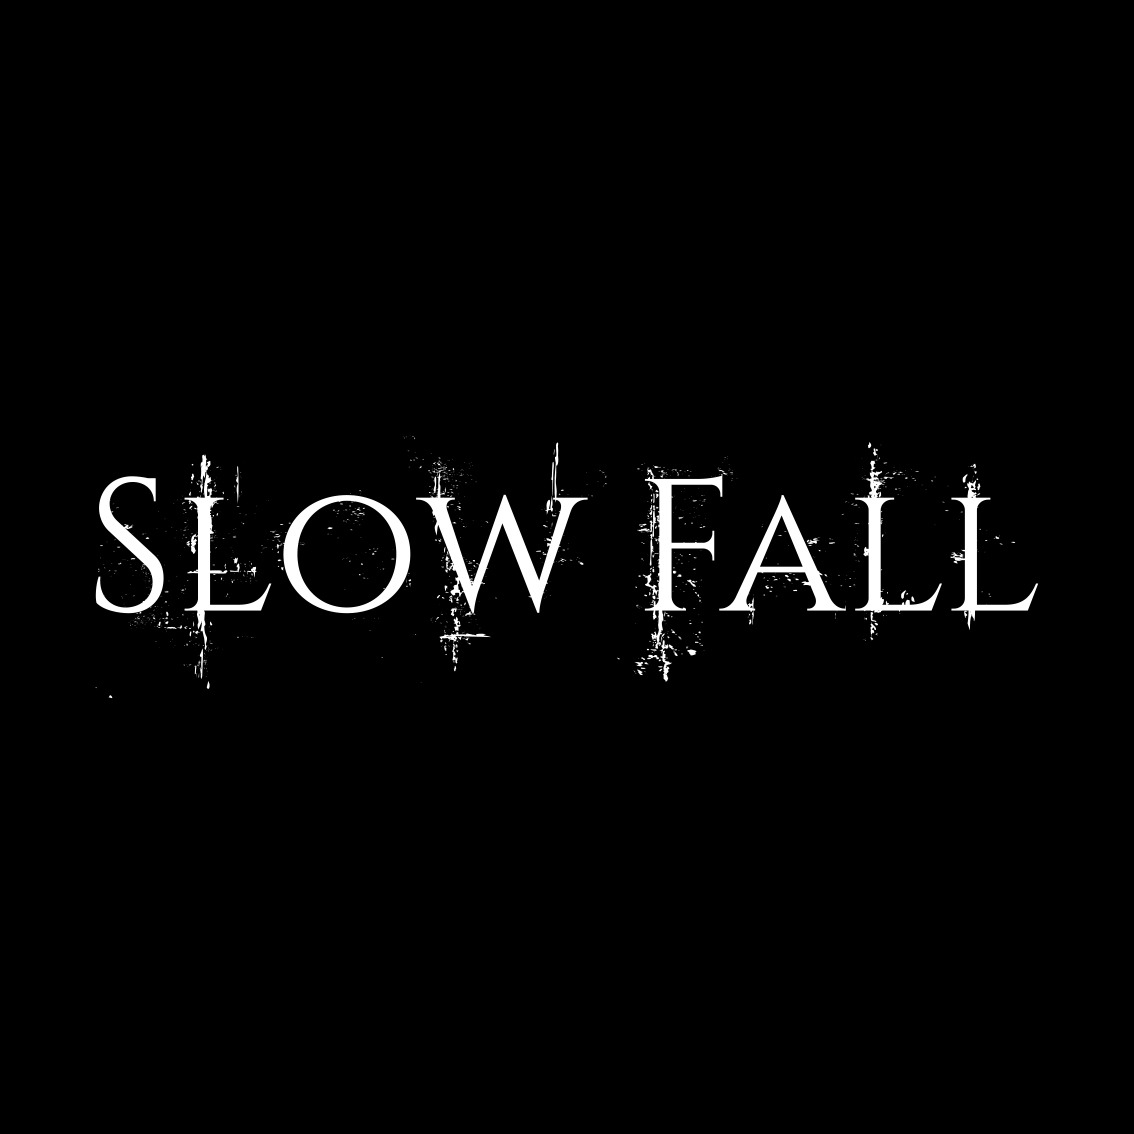 Falling slowed. Slow. Slowly картинка. Картинки Slowed. Slow Slow.